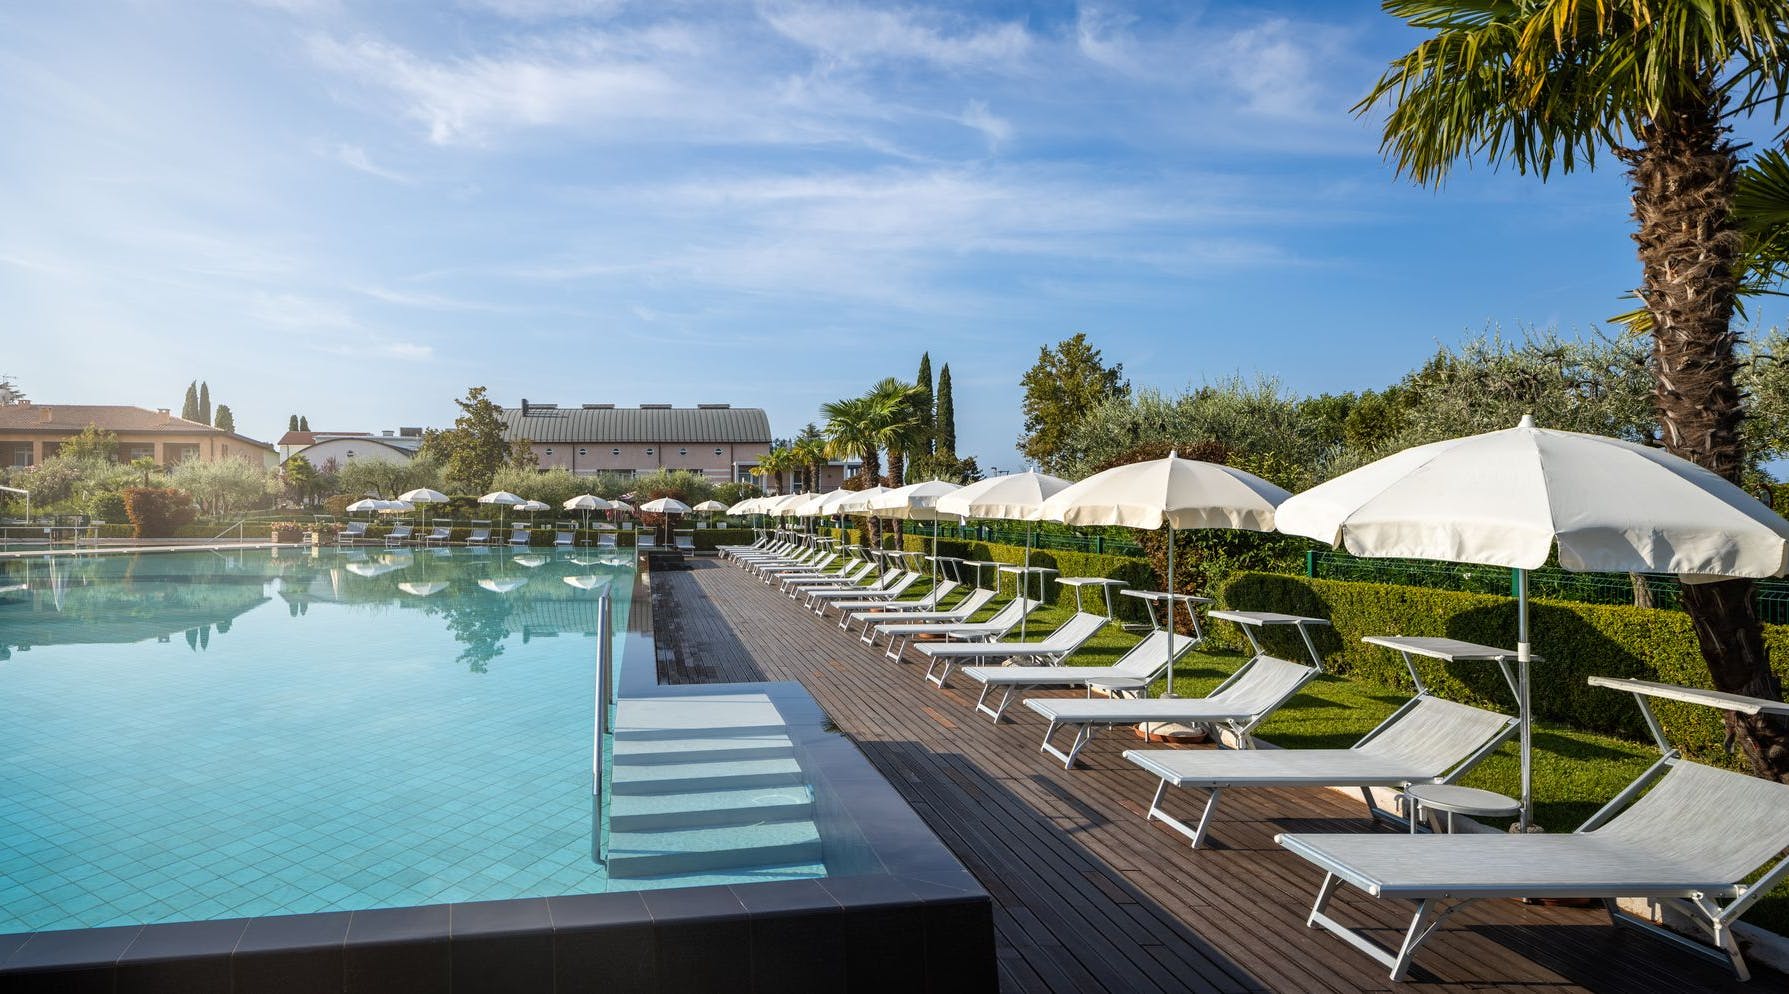 Swimming pool-umbrellas-sun-blue sky-hotel